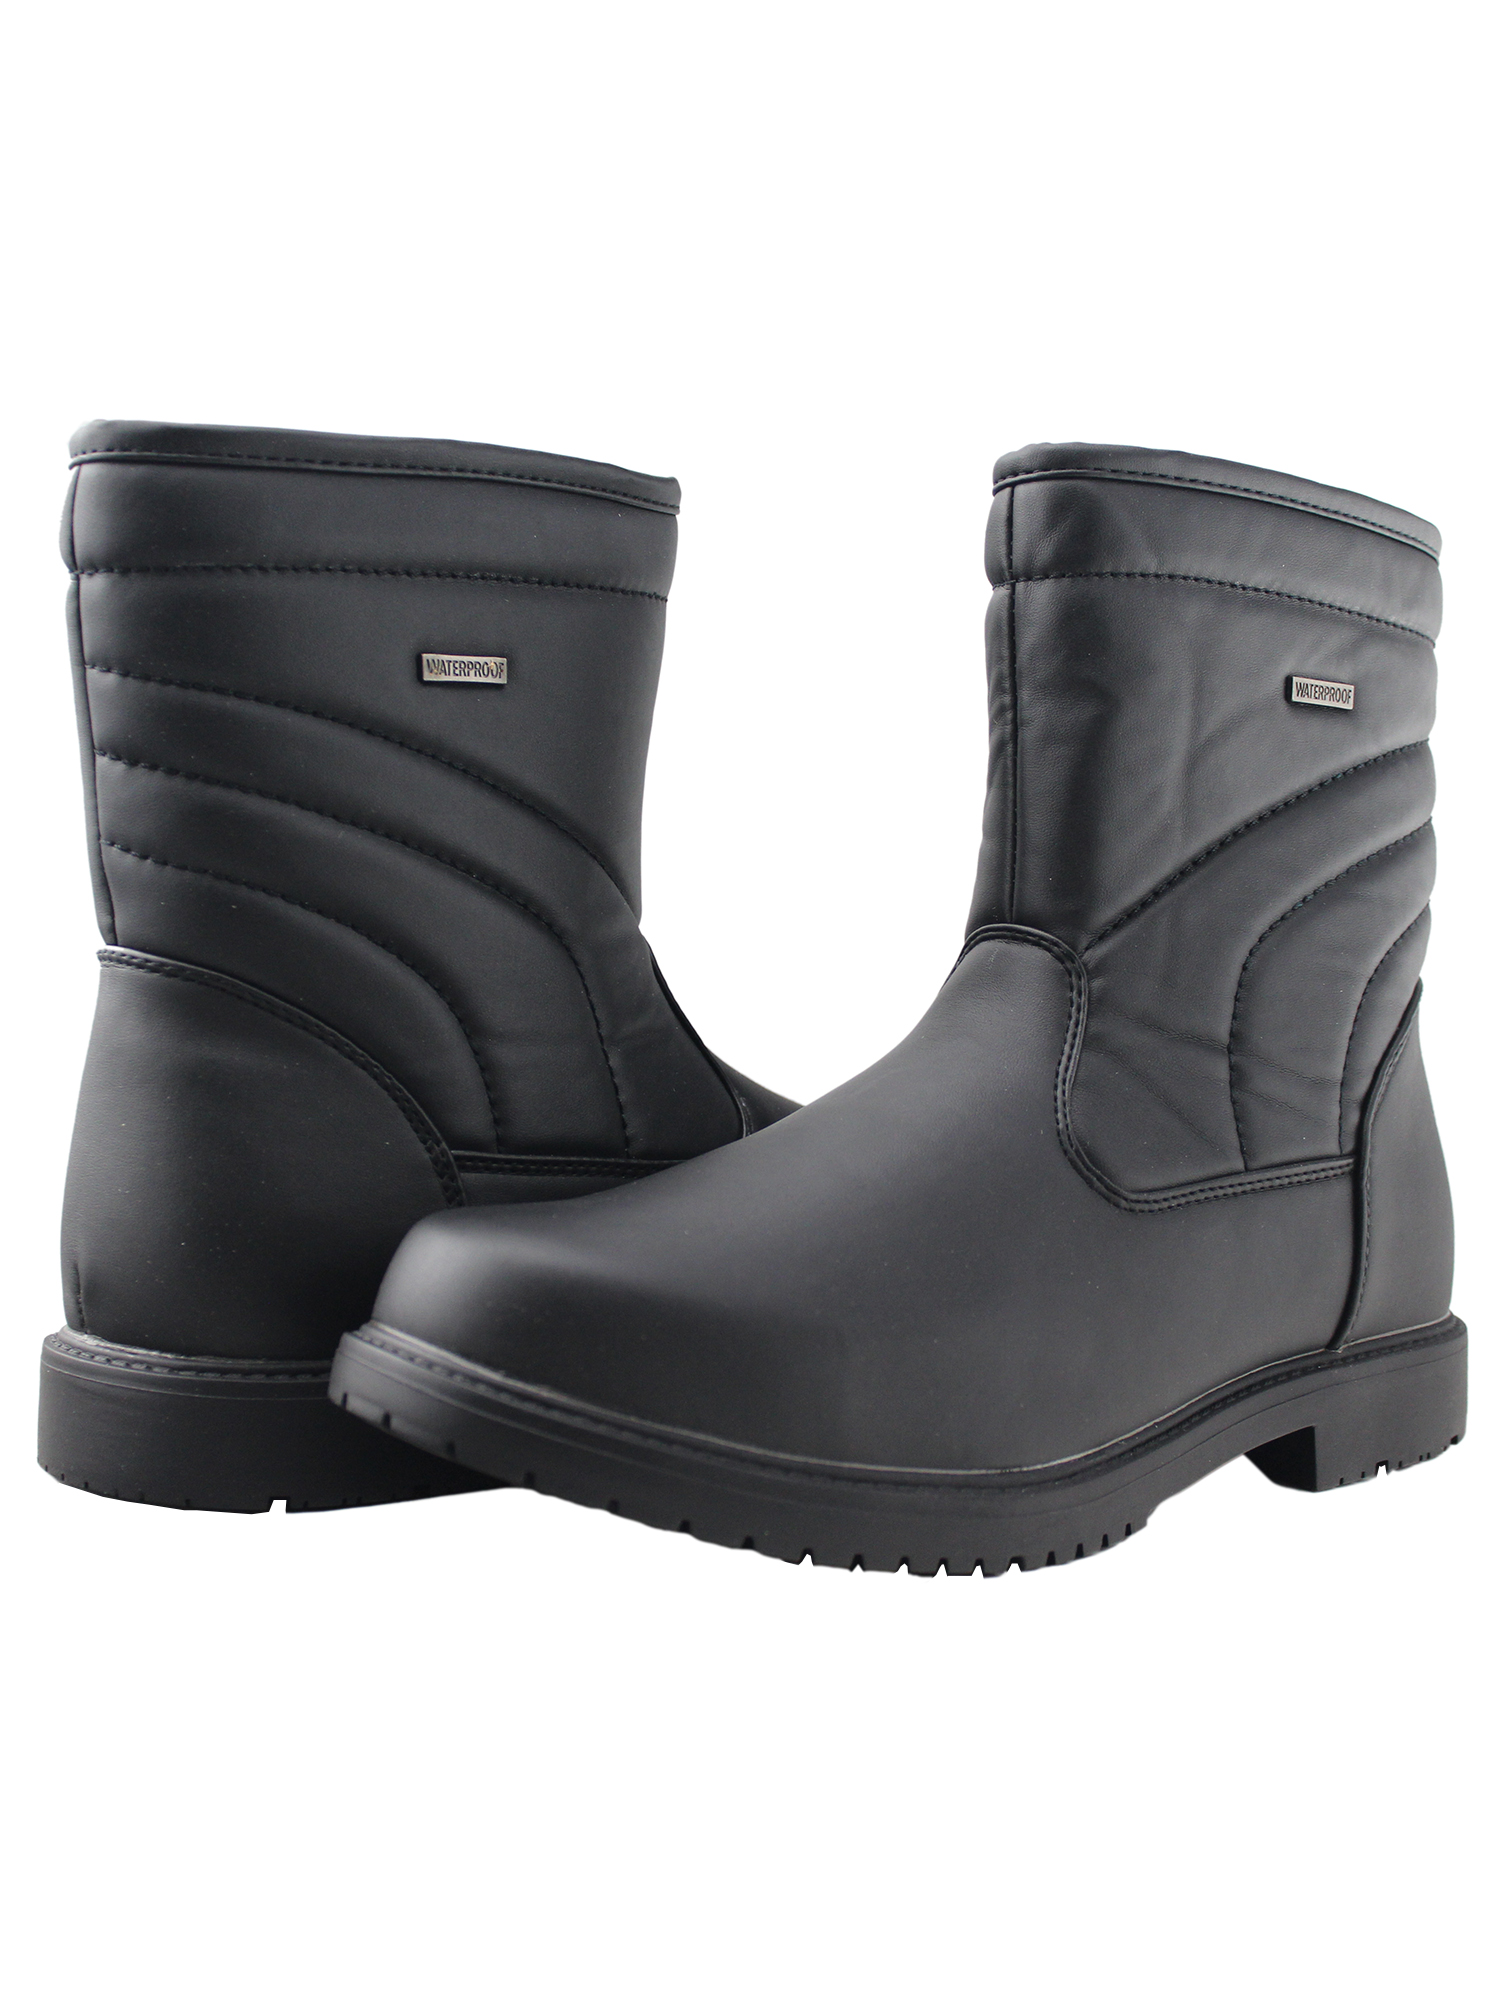 Tanleewa Men's Winter Boots Fur Lining Waterproof Non Slip Snow Boots Side Zipper Shoe Size 7 - image 1 of 6